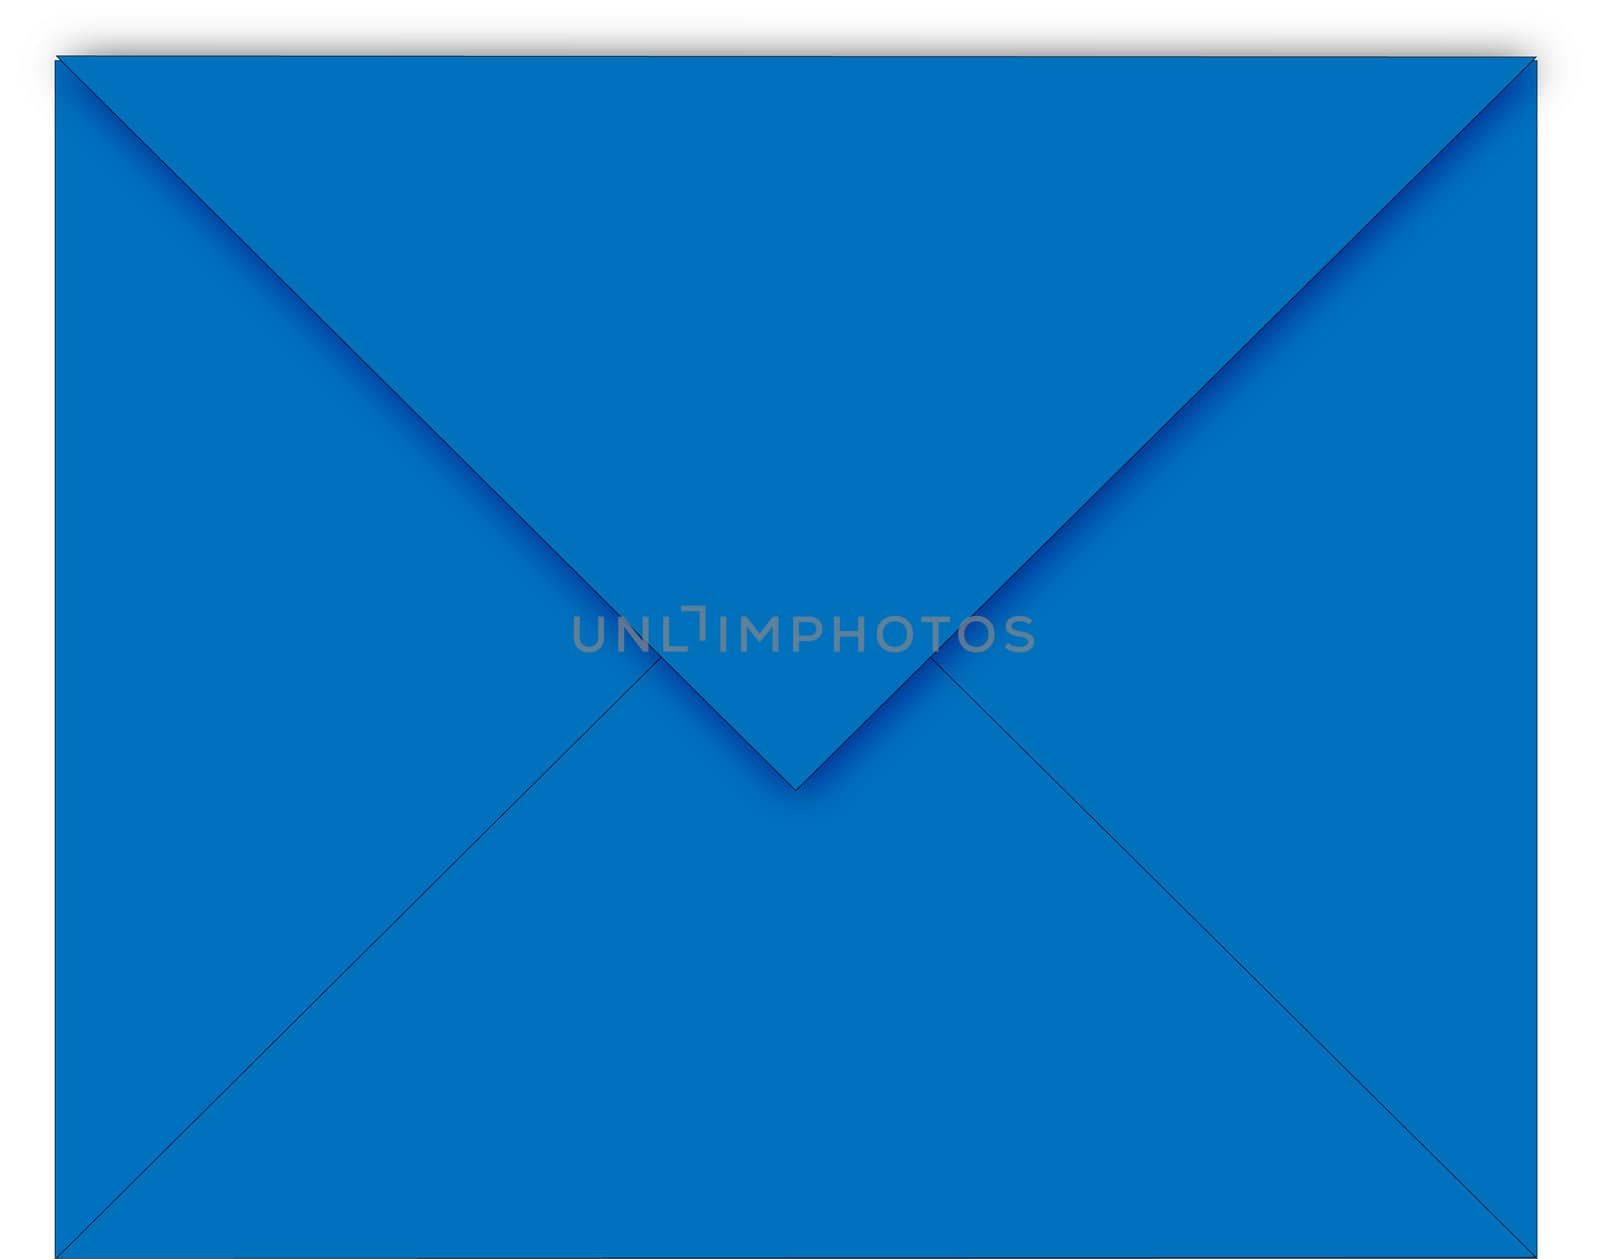 A big blue envelope